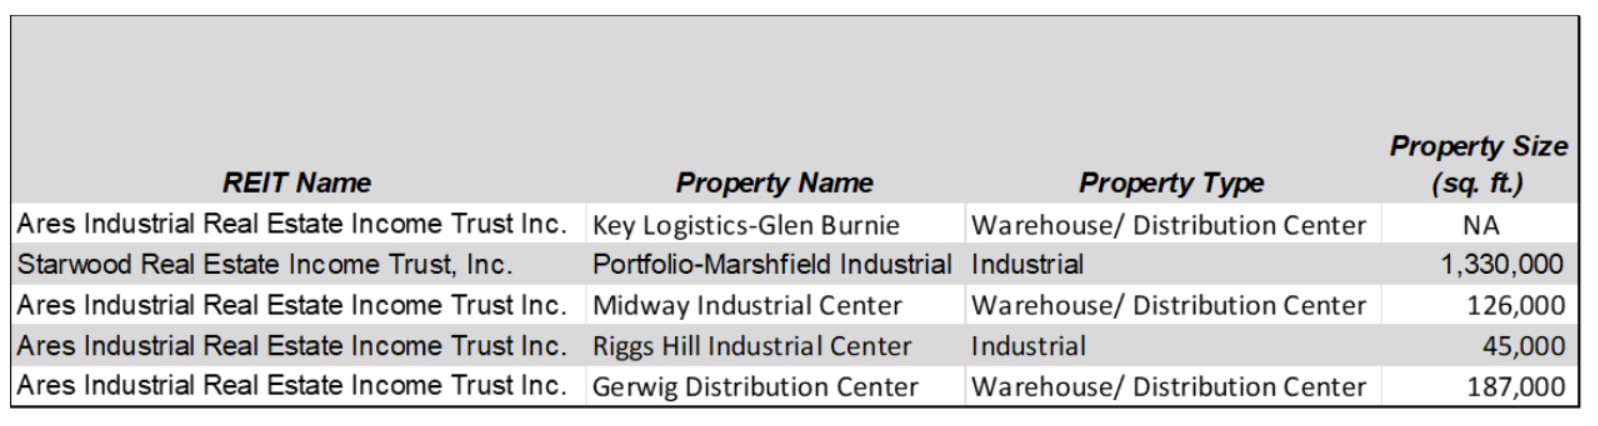 Baltimore Area Properties in Nontraded REIT Portfolios